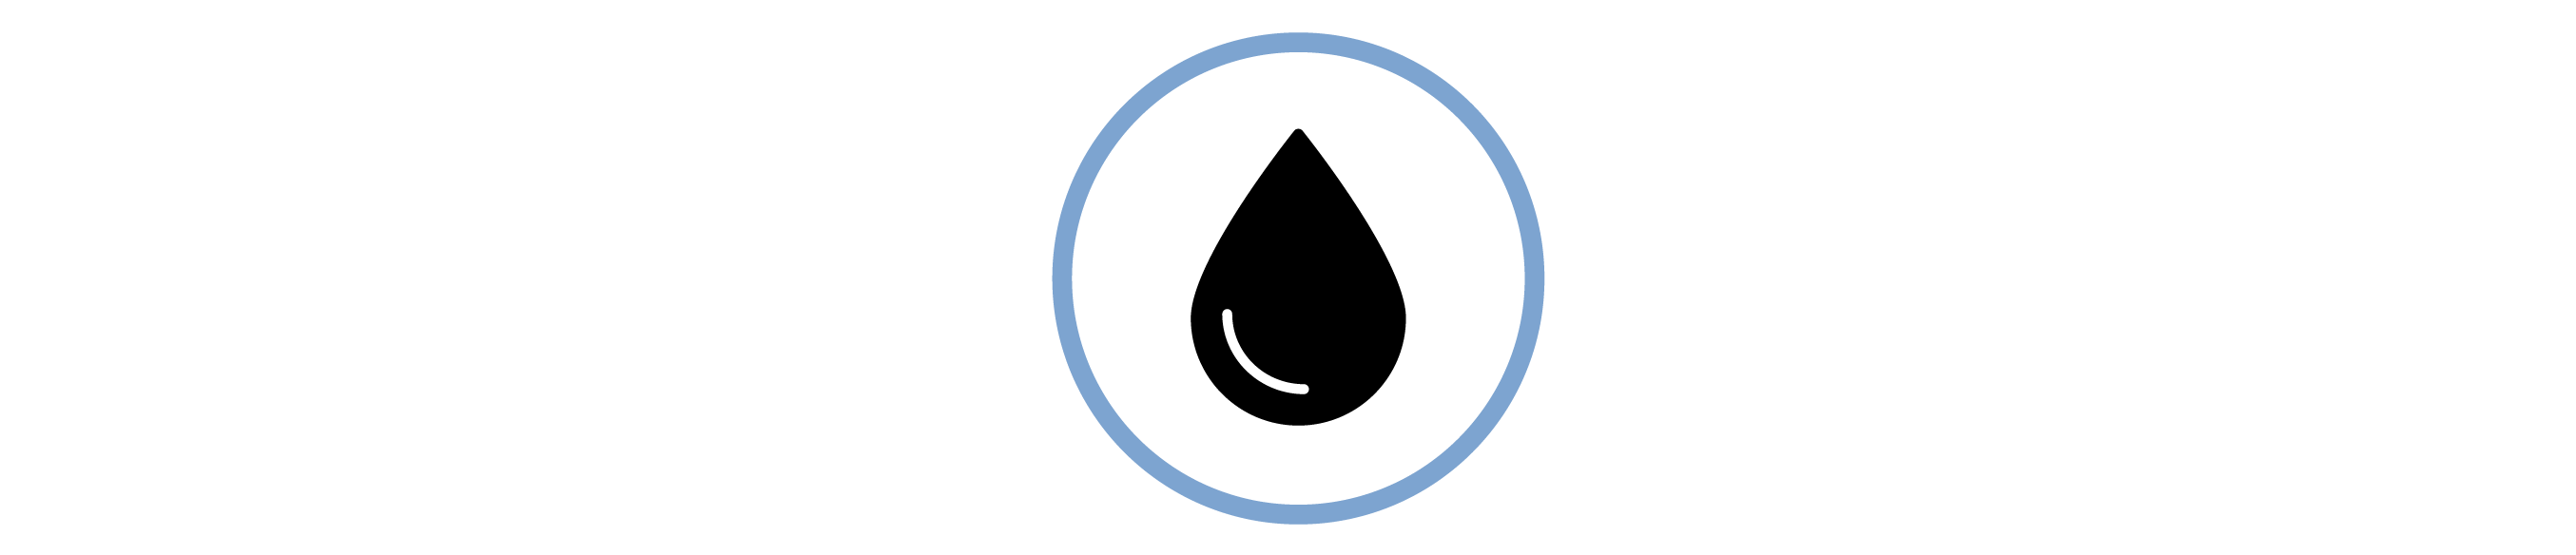 wet laboratory symbol